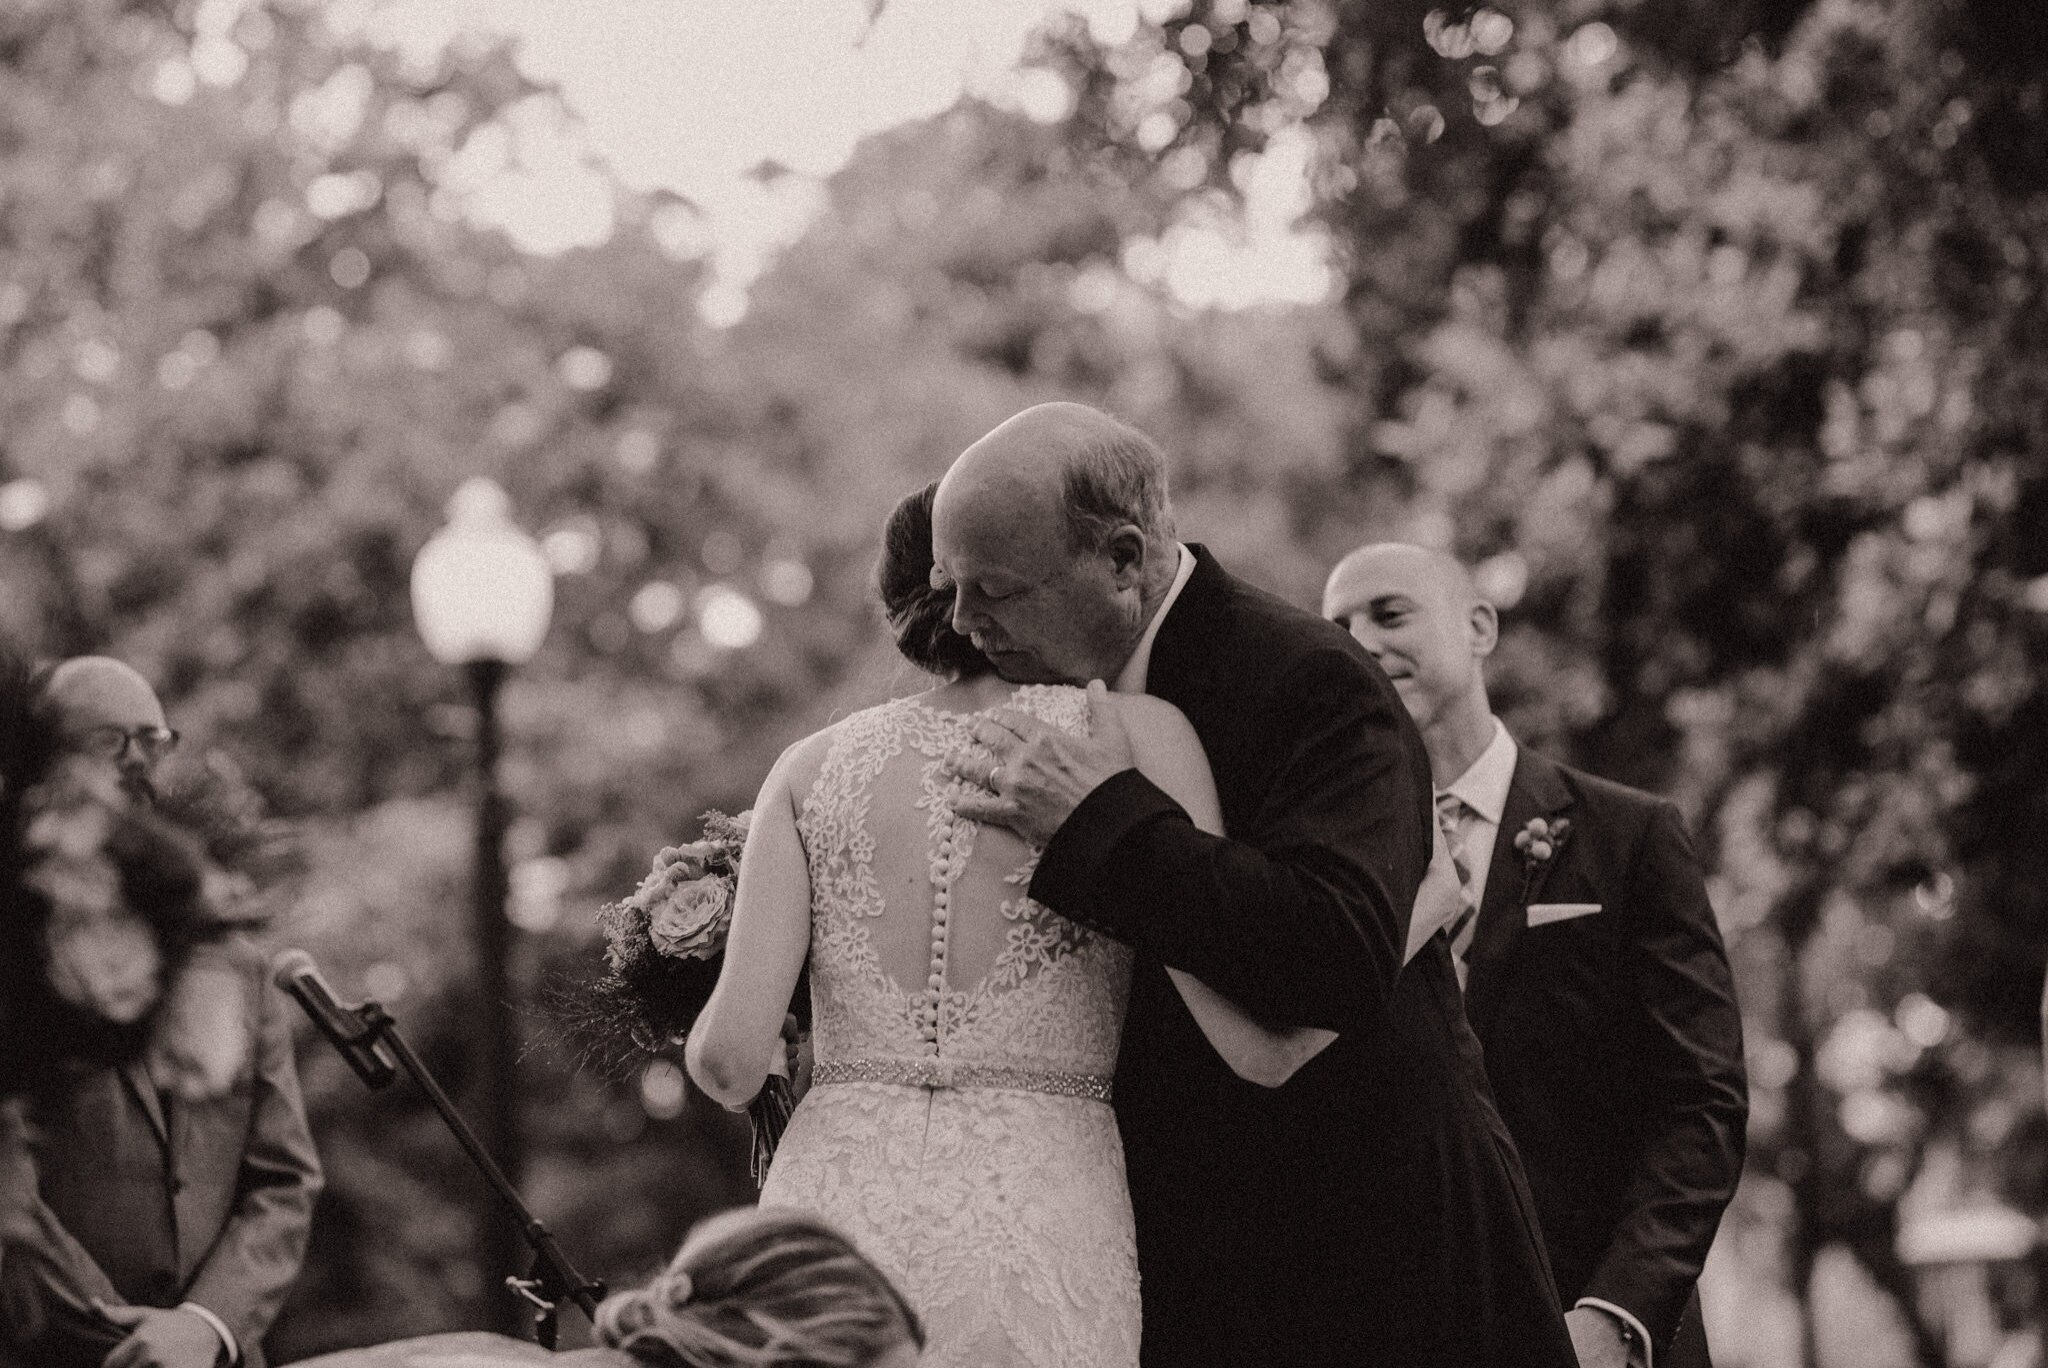 forsyth-park-wedding-destination-wedding-photographers-boston-vanessaalvesphotography-58.jpg